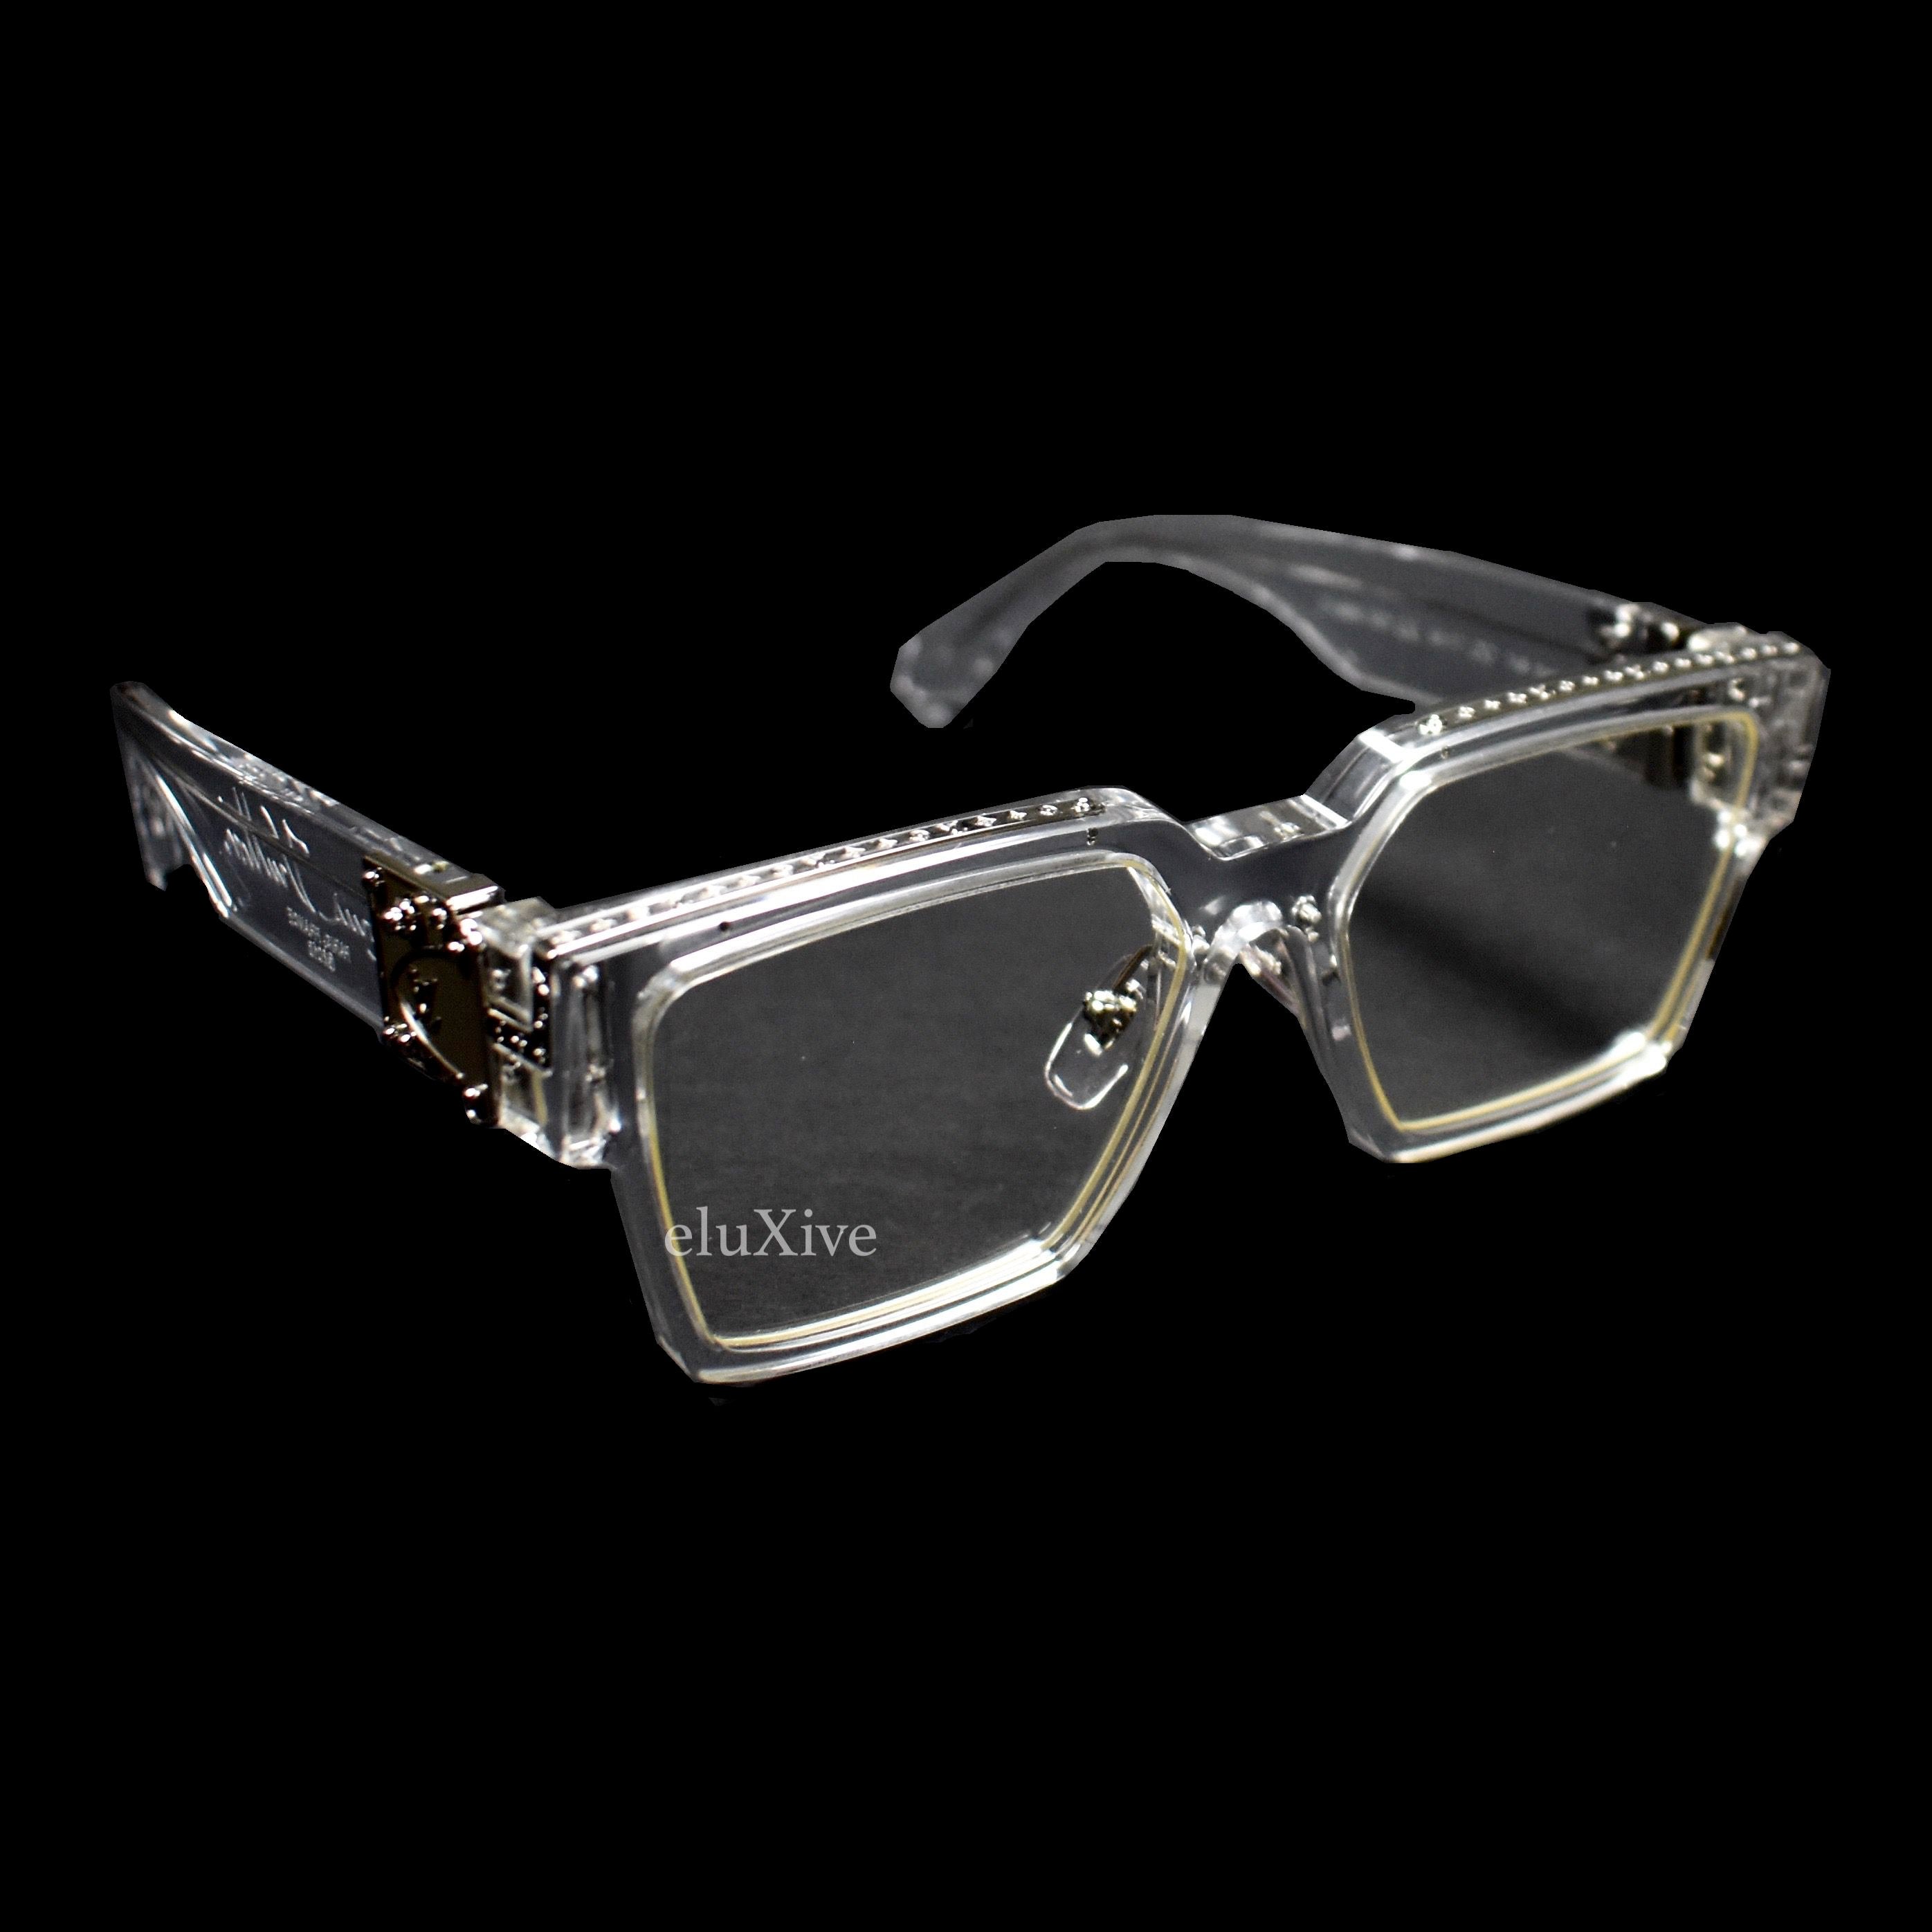 LV Millionairs 1.01 sunglasses missing box glasses only fully